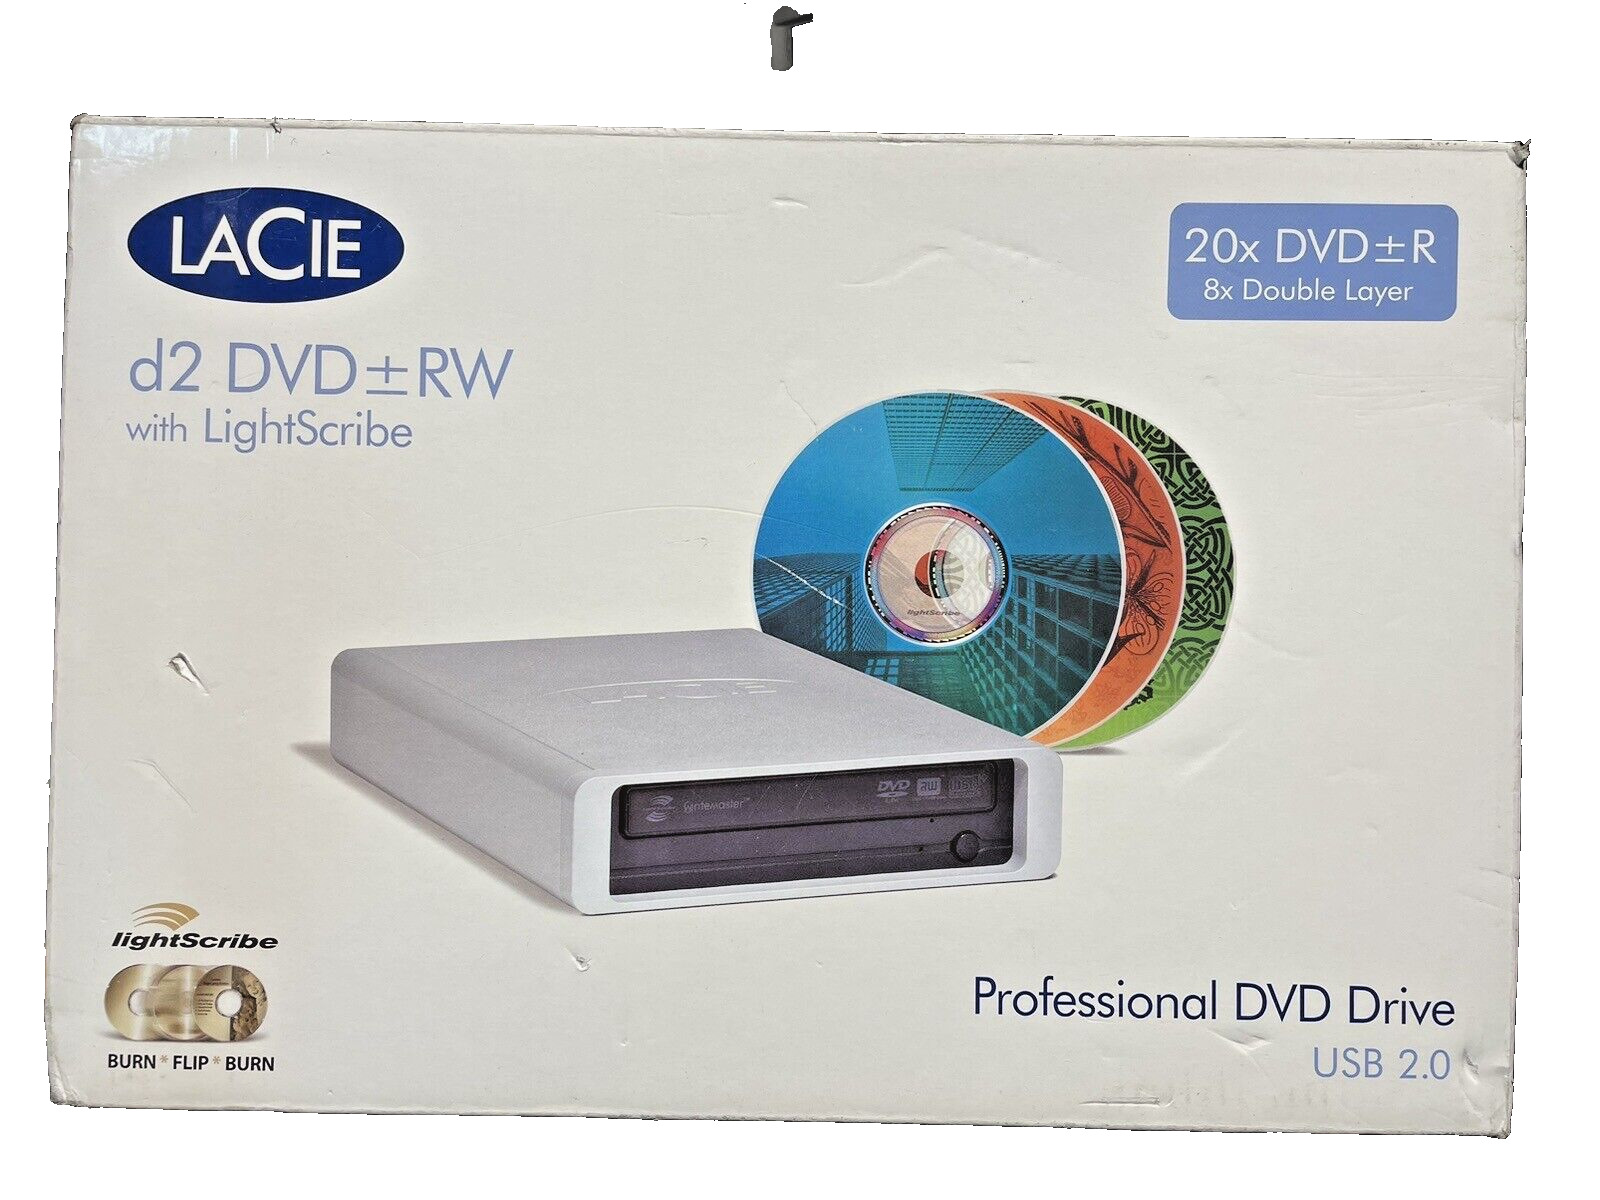 LaCie Professional DVD Drive USB 2.0 Light Scribe d2 20x DVD RW 8x Double Layer